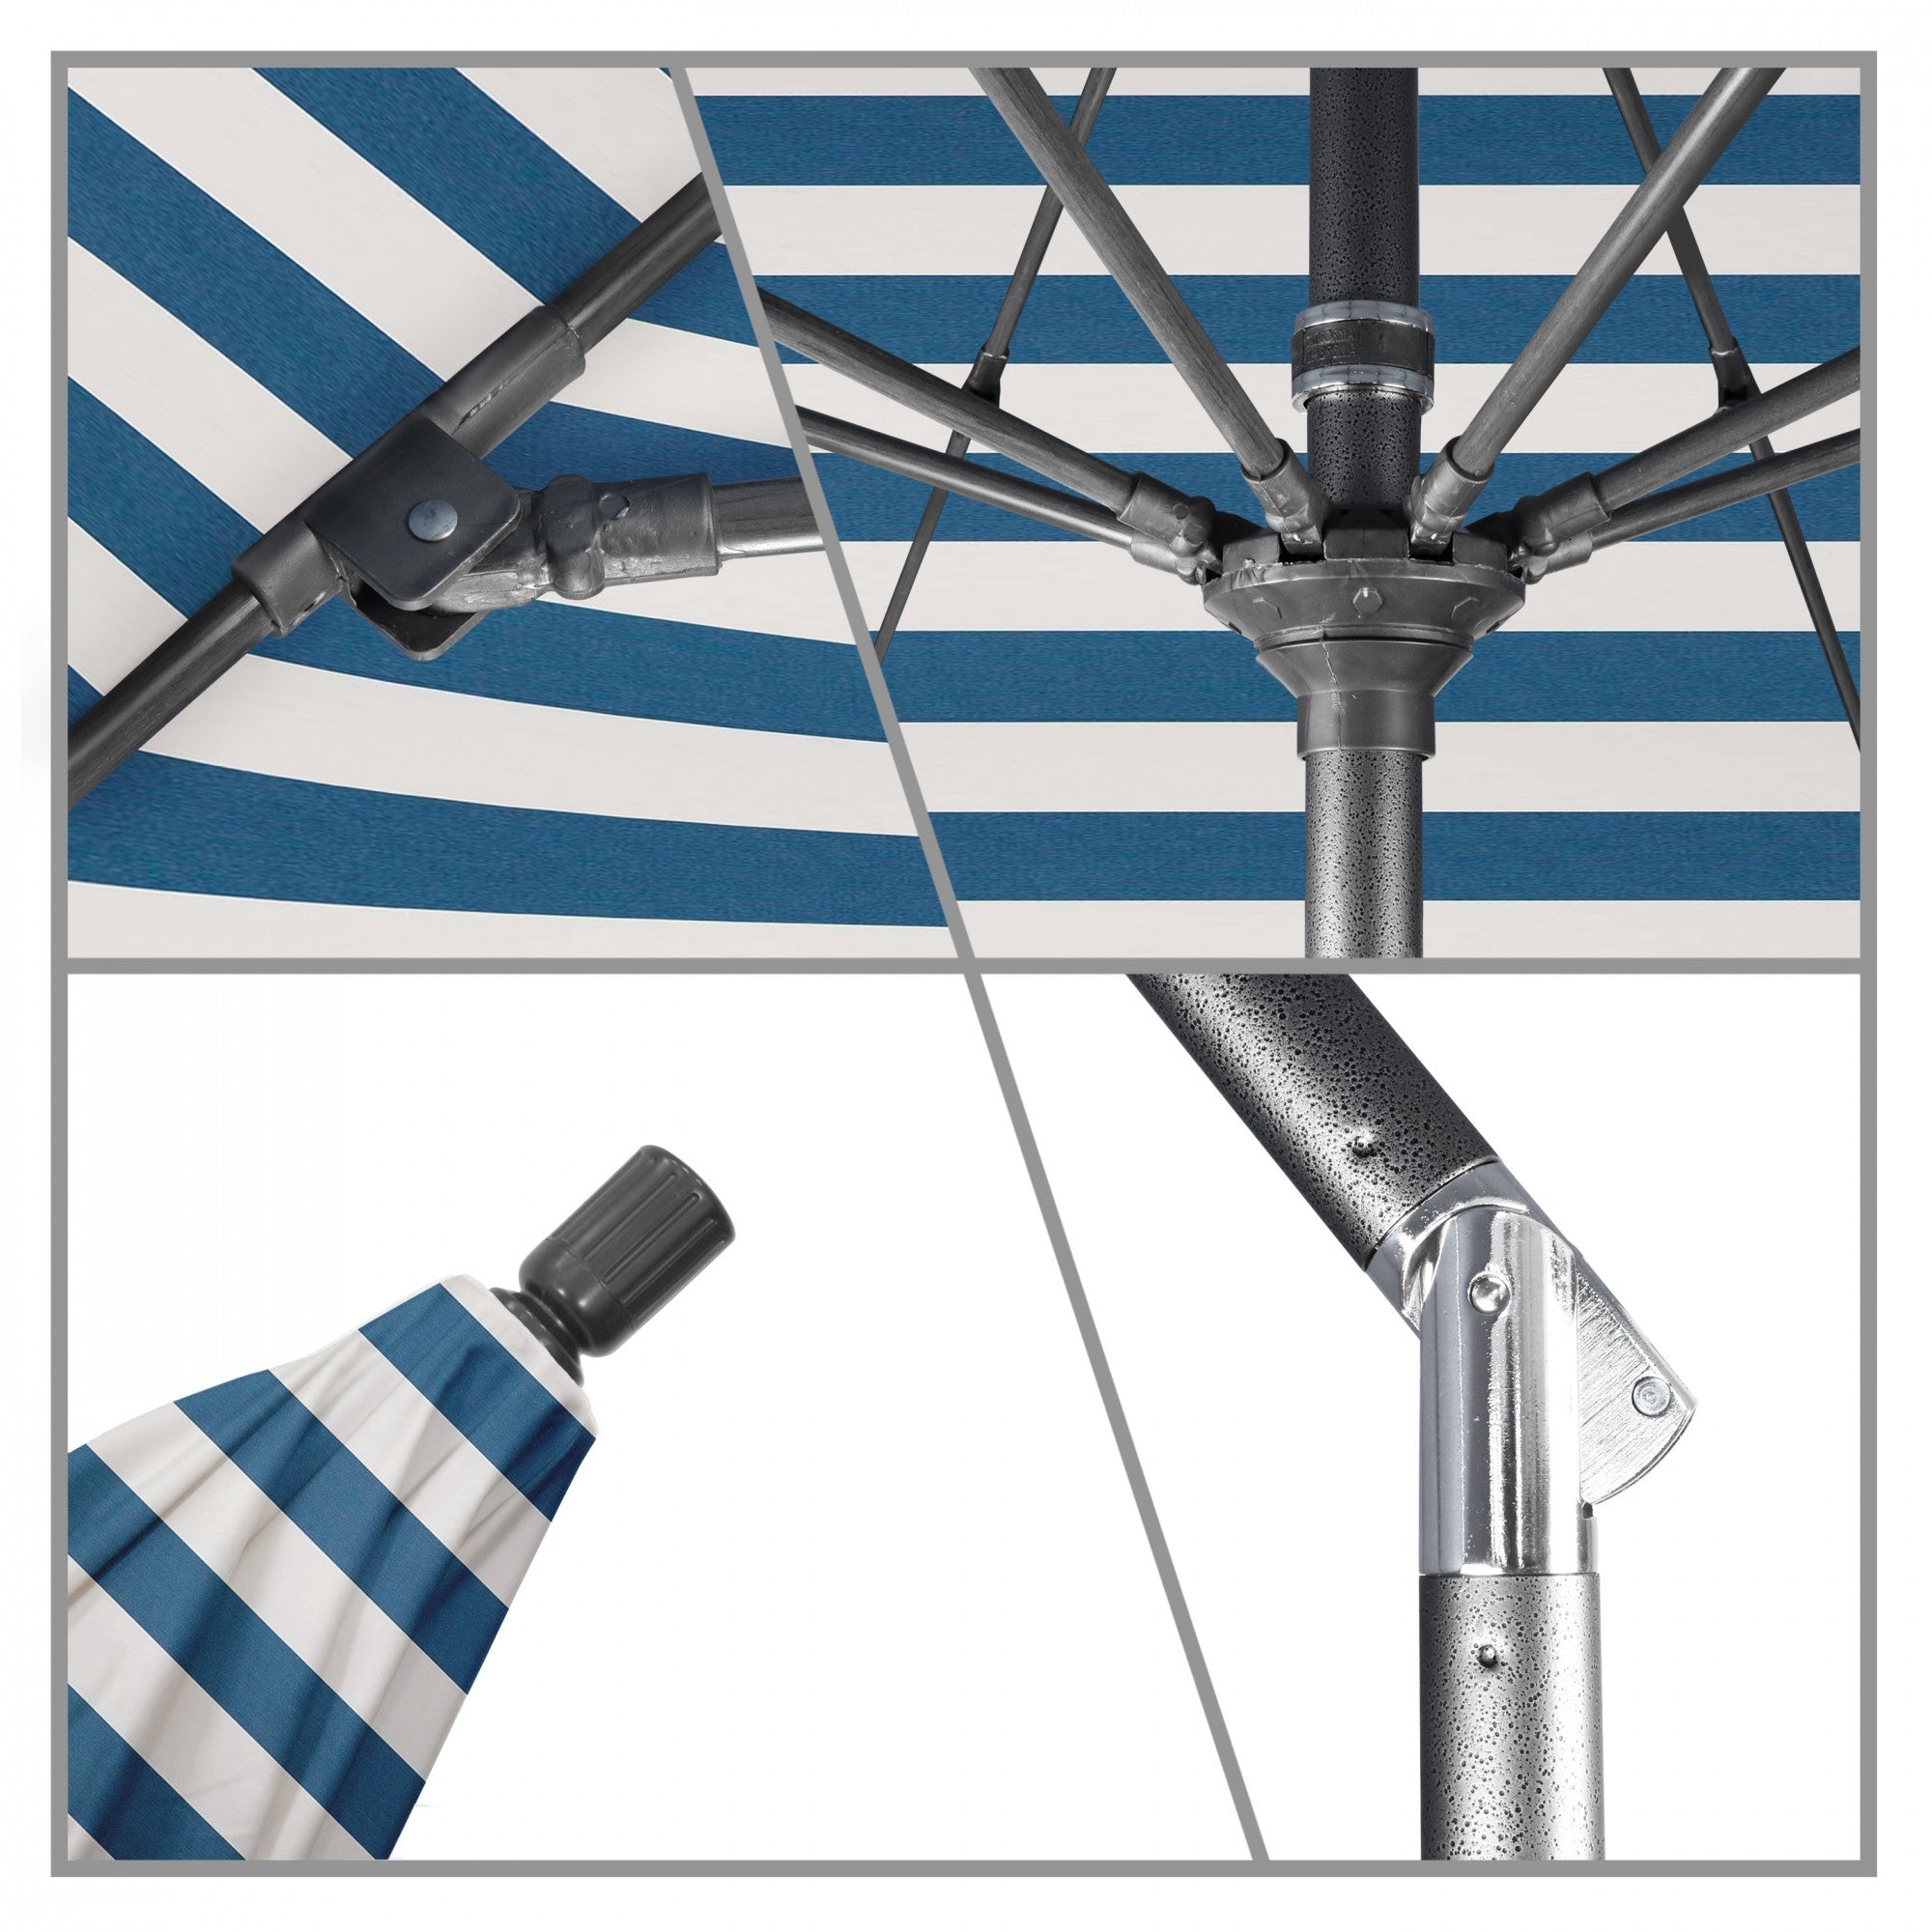 California Umbrella - 7.5' - Patio Umbrella Umbrella - Aluminum Pole - Cabana Regatta  - Sunbrella  - GSCUF758010-58029